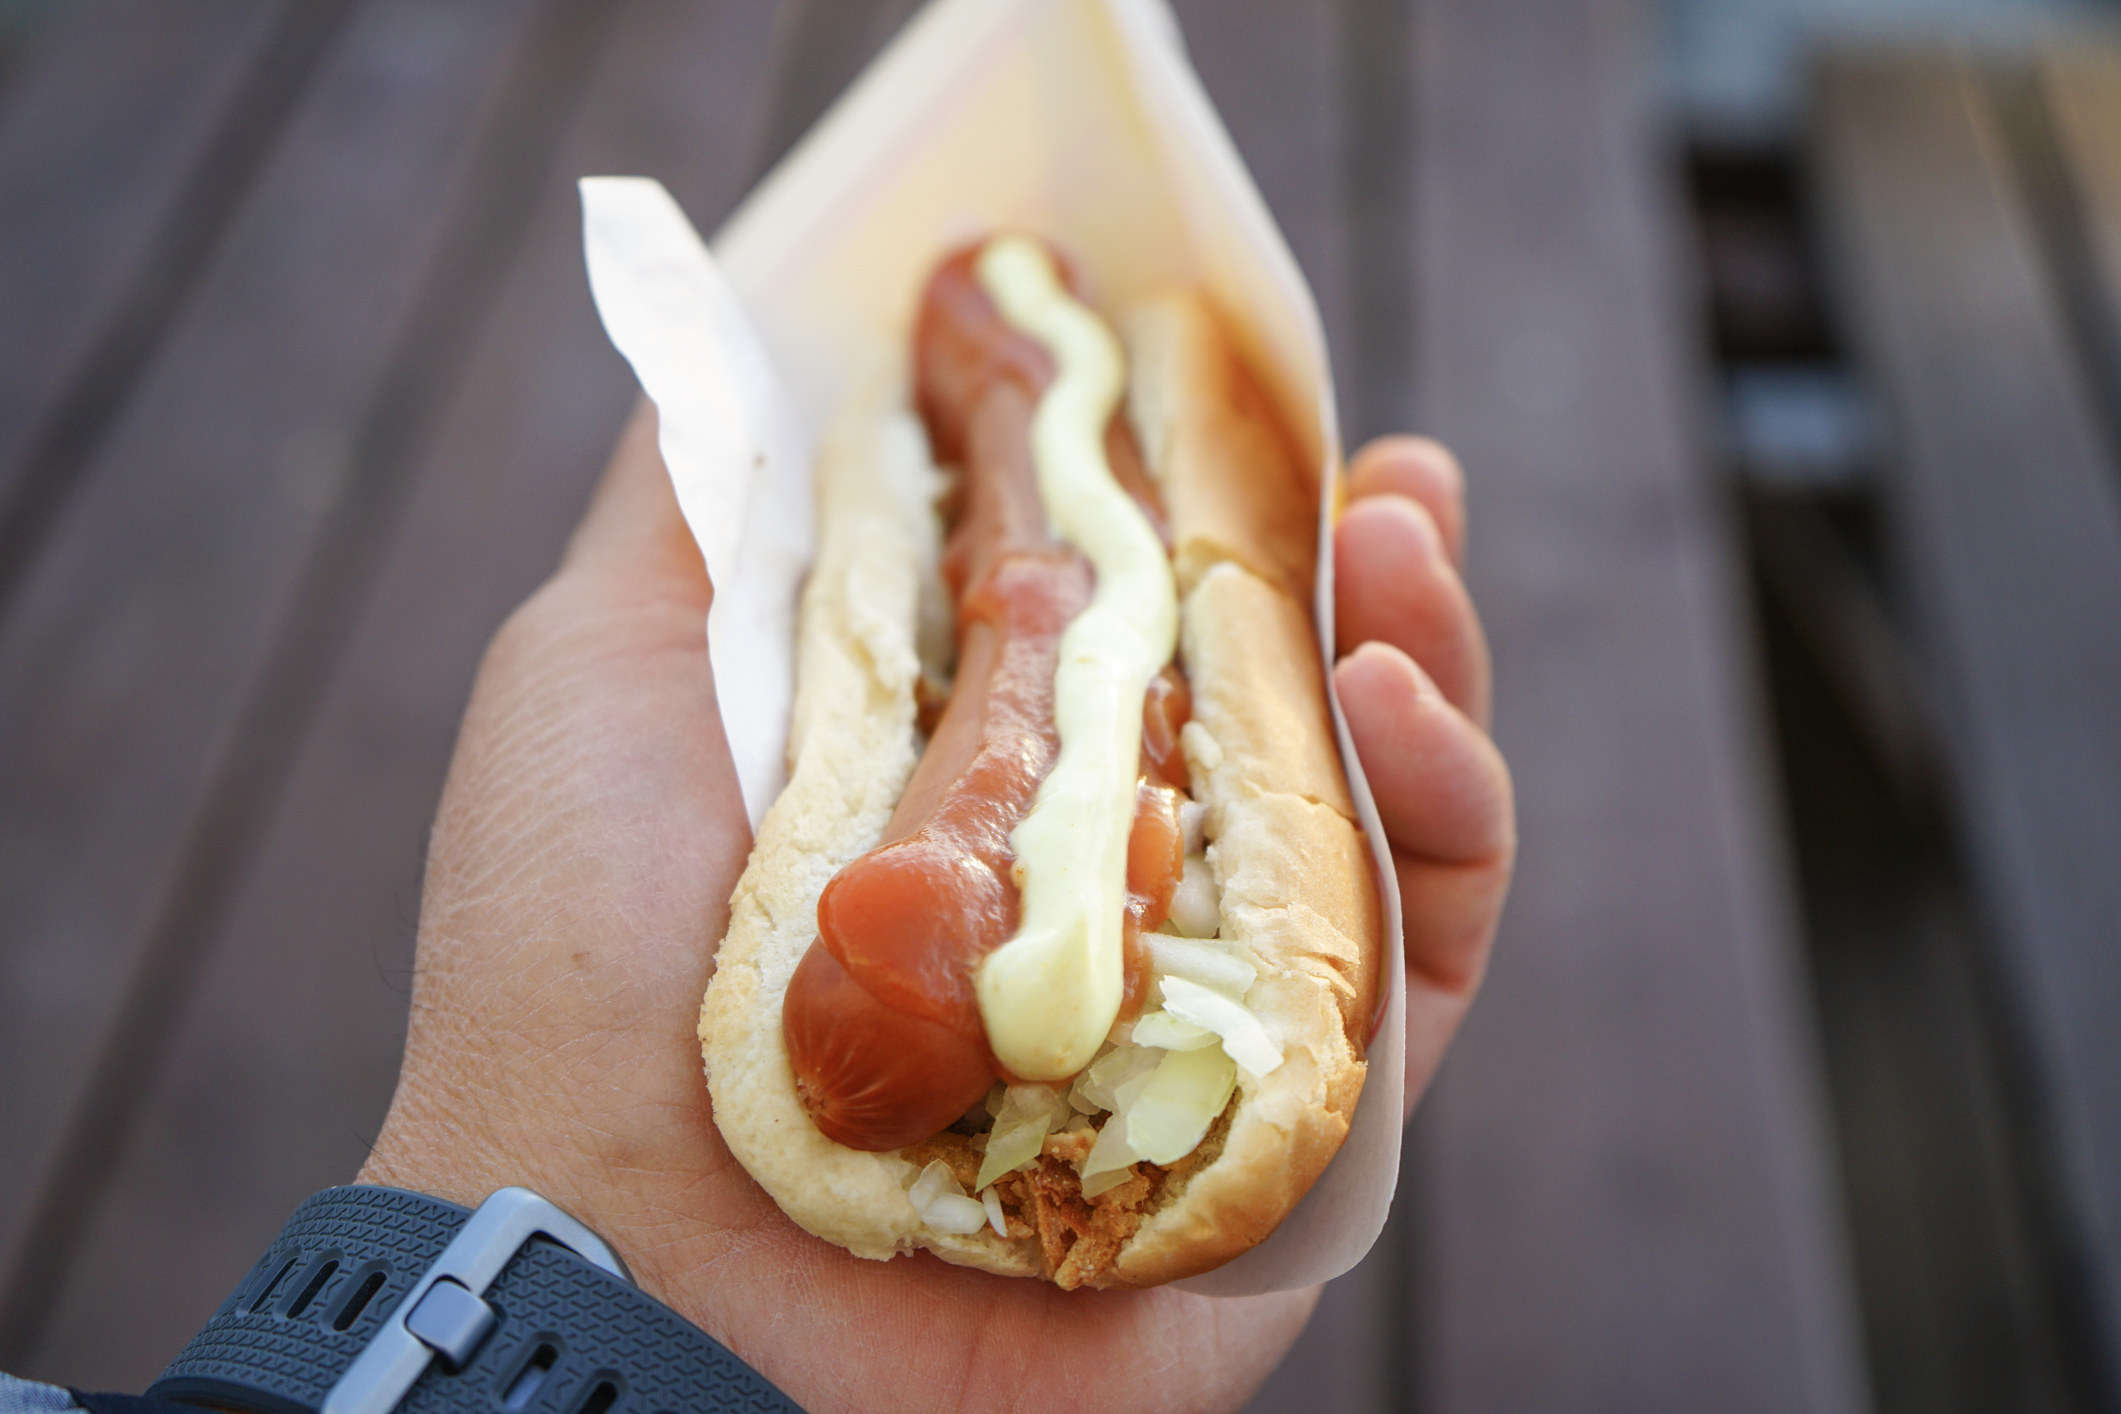 An Icelandic hotdog with ketchup and mustard.